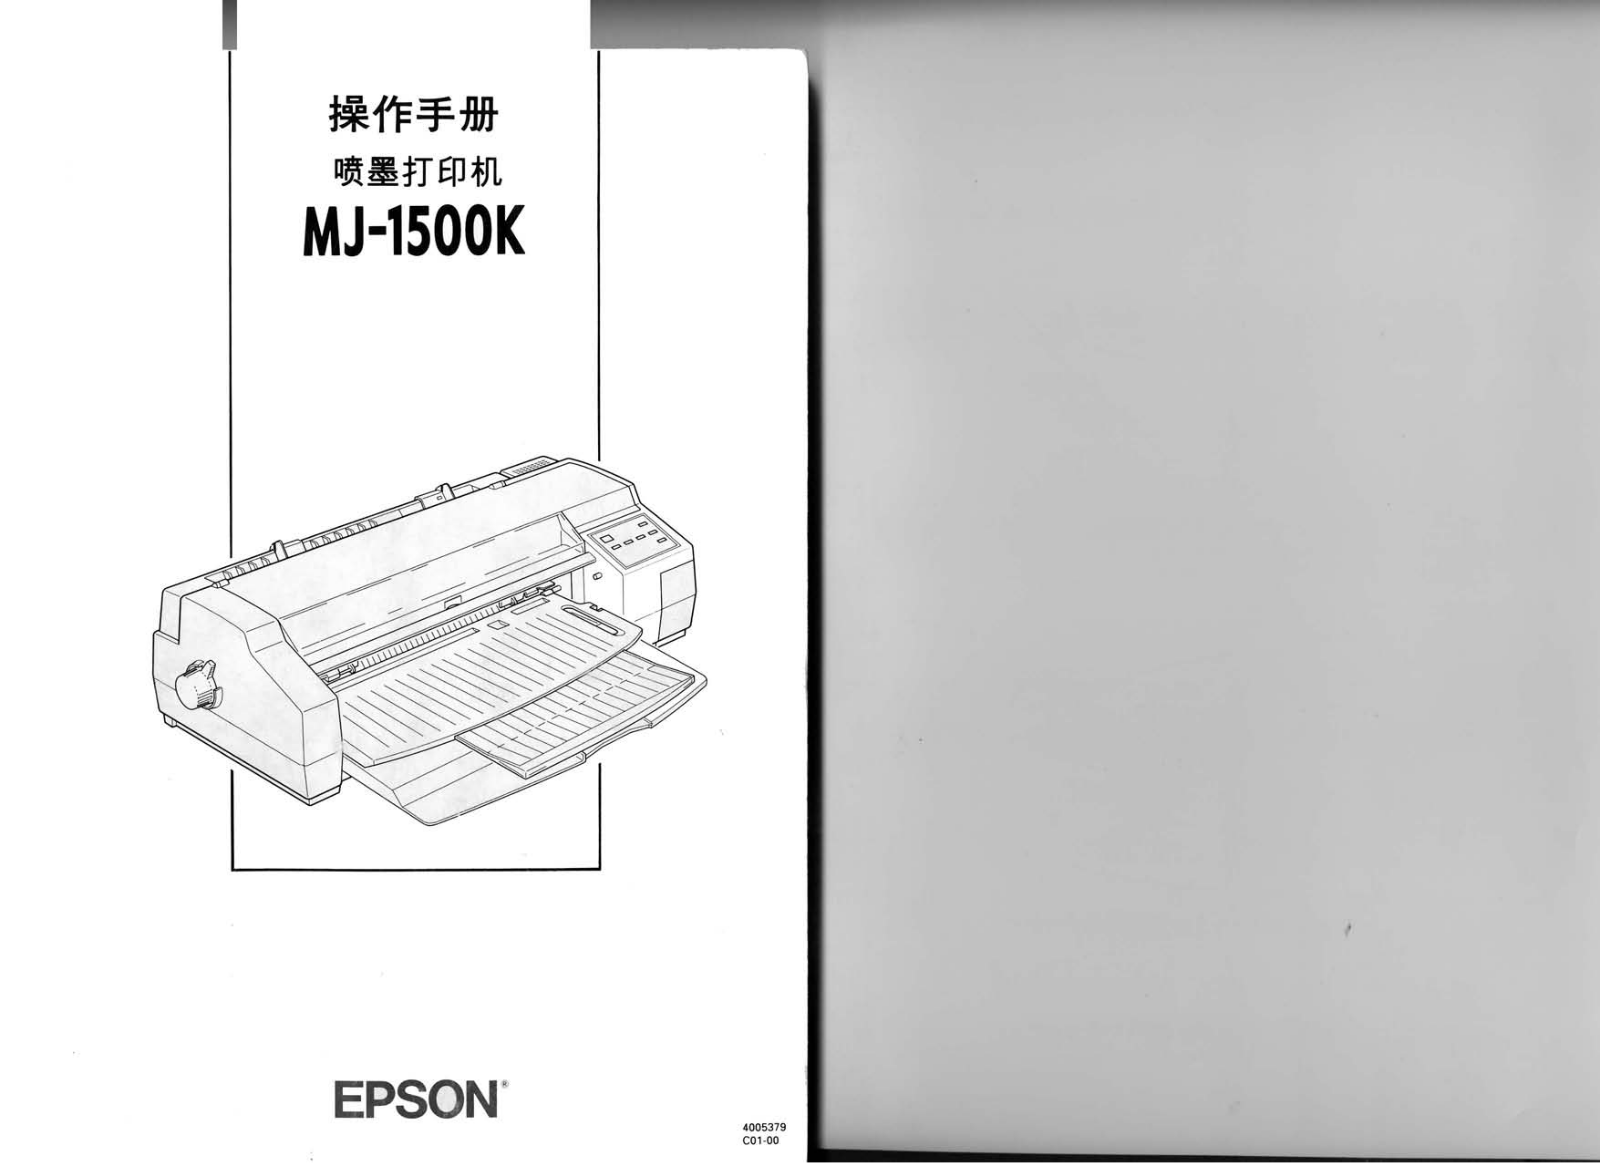 Epson STYLUS MJ-1500K User Manual